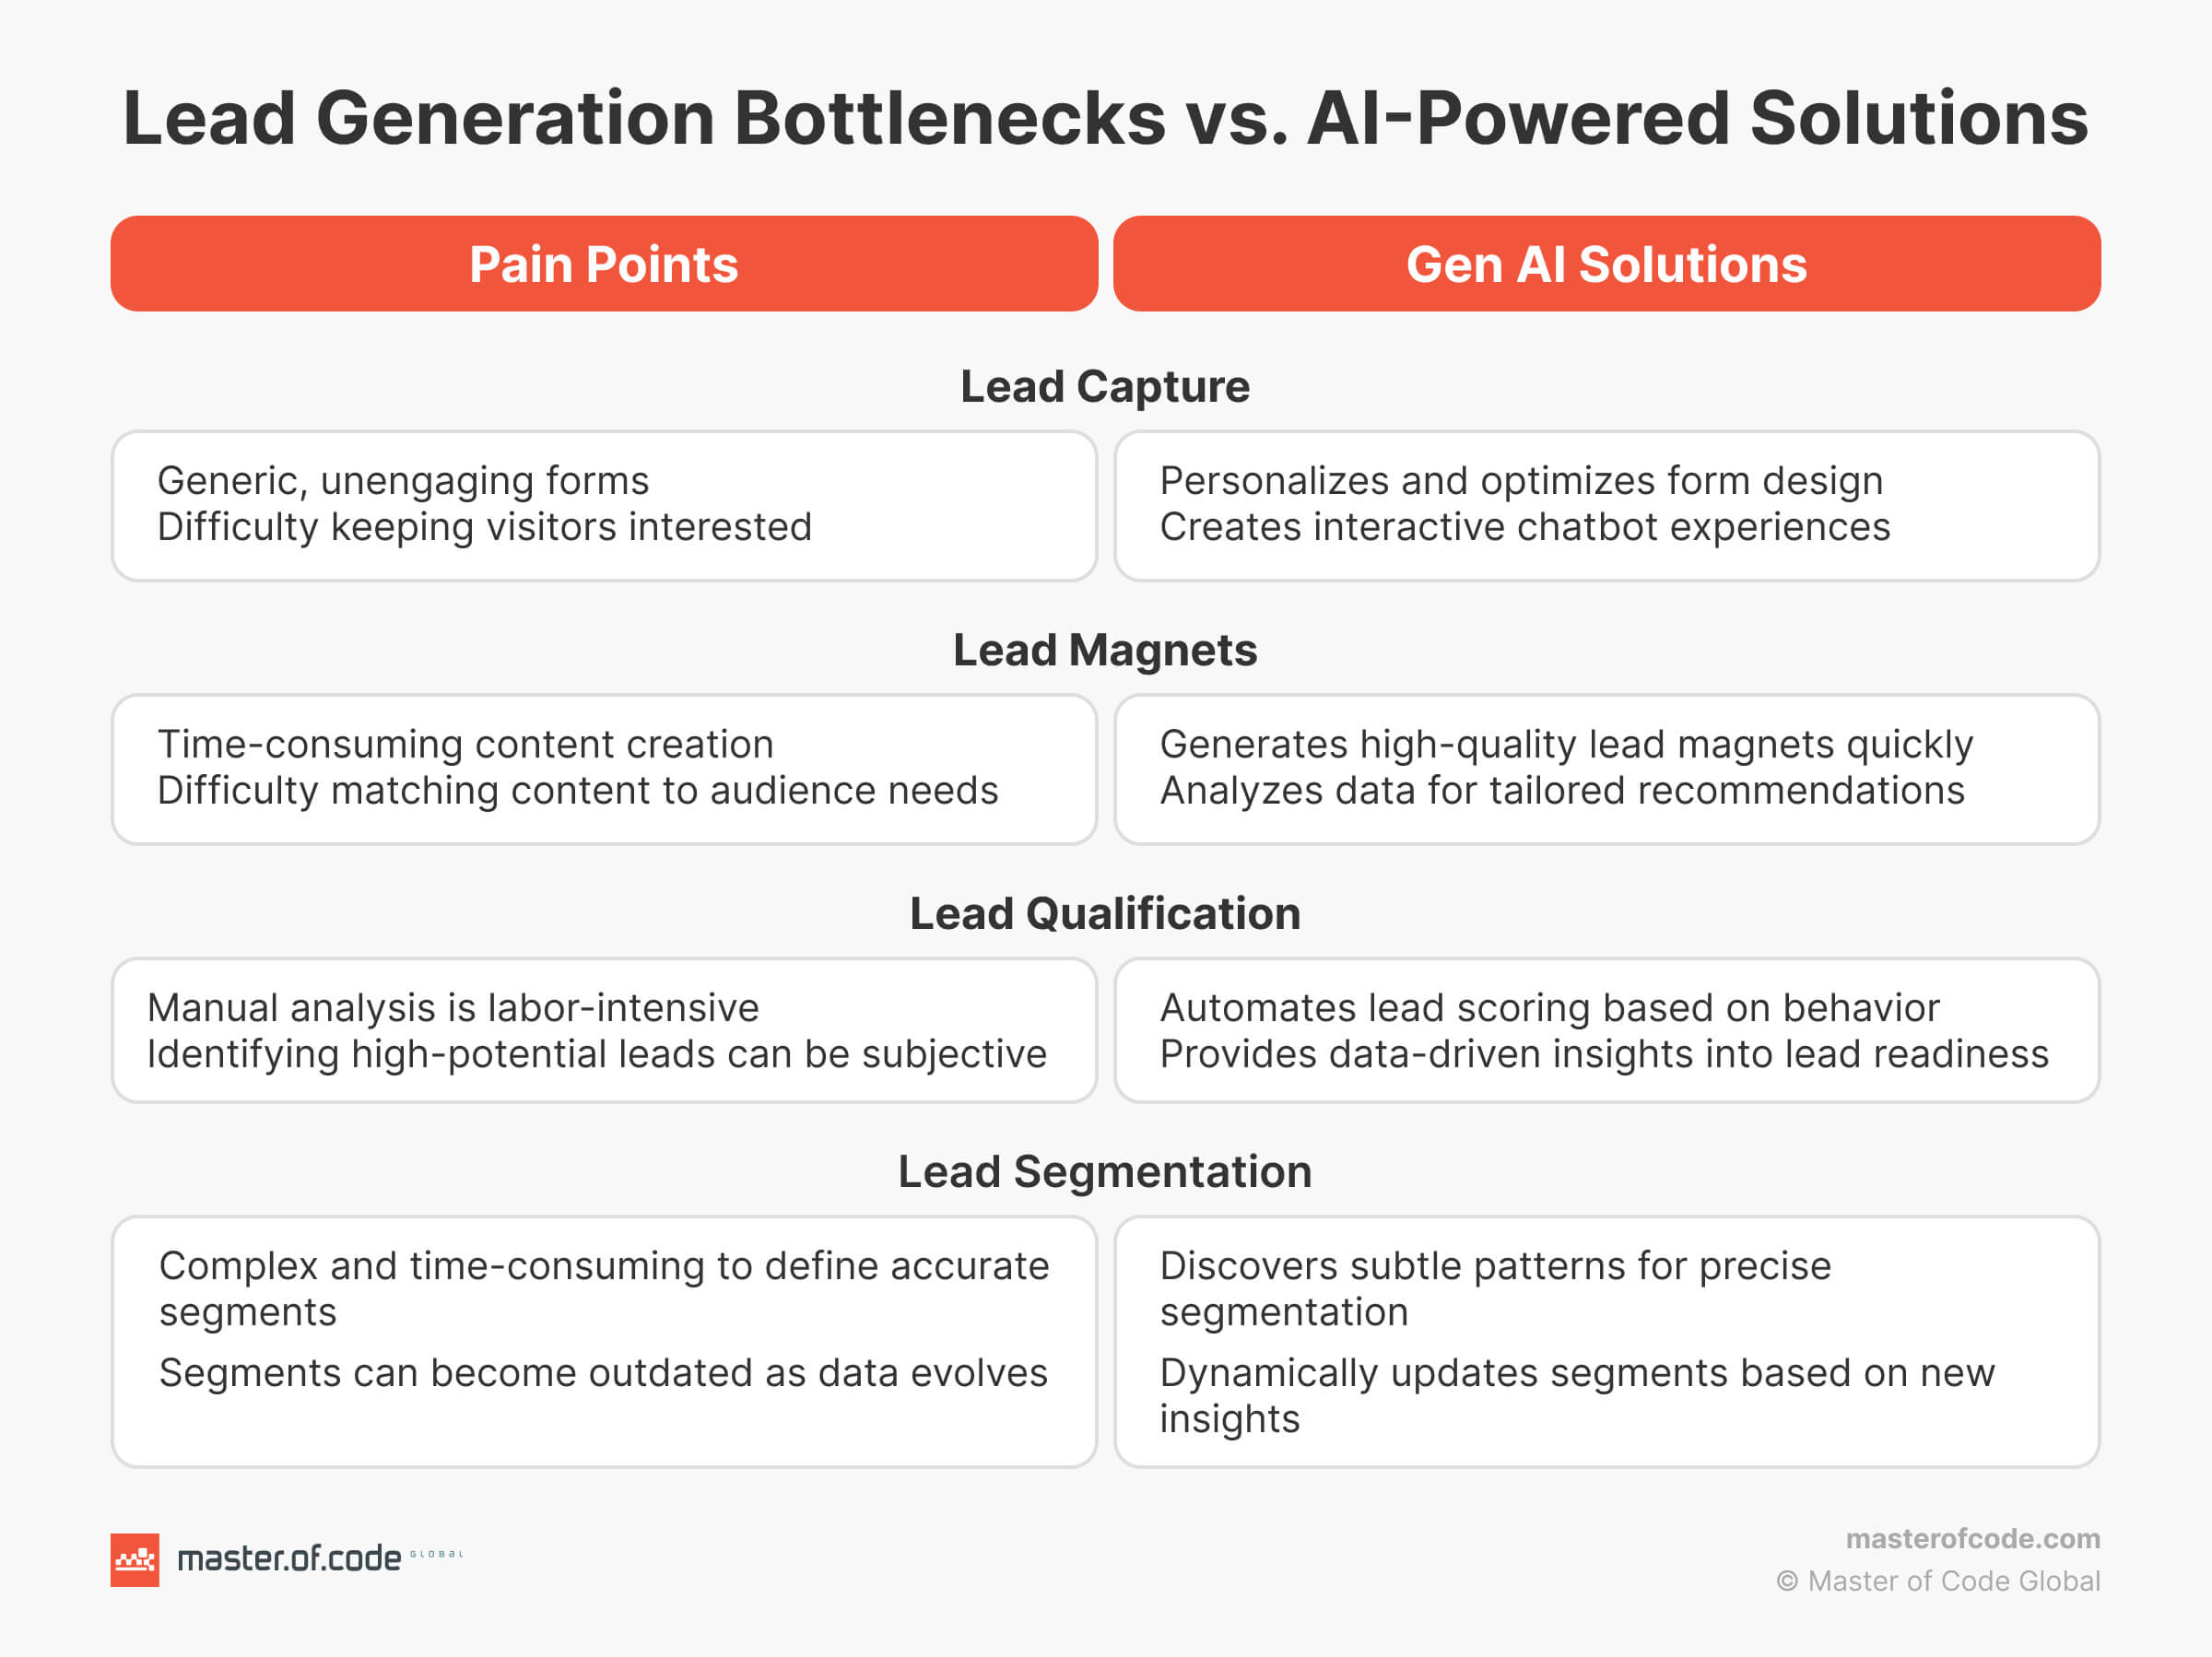 Lead Generation Bottlenecks vs AI solutions